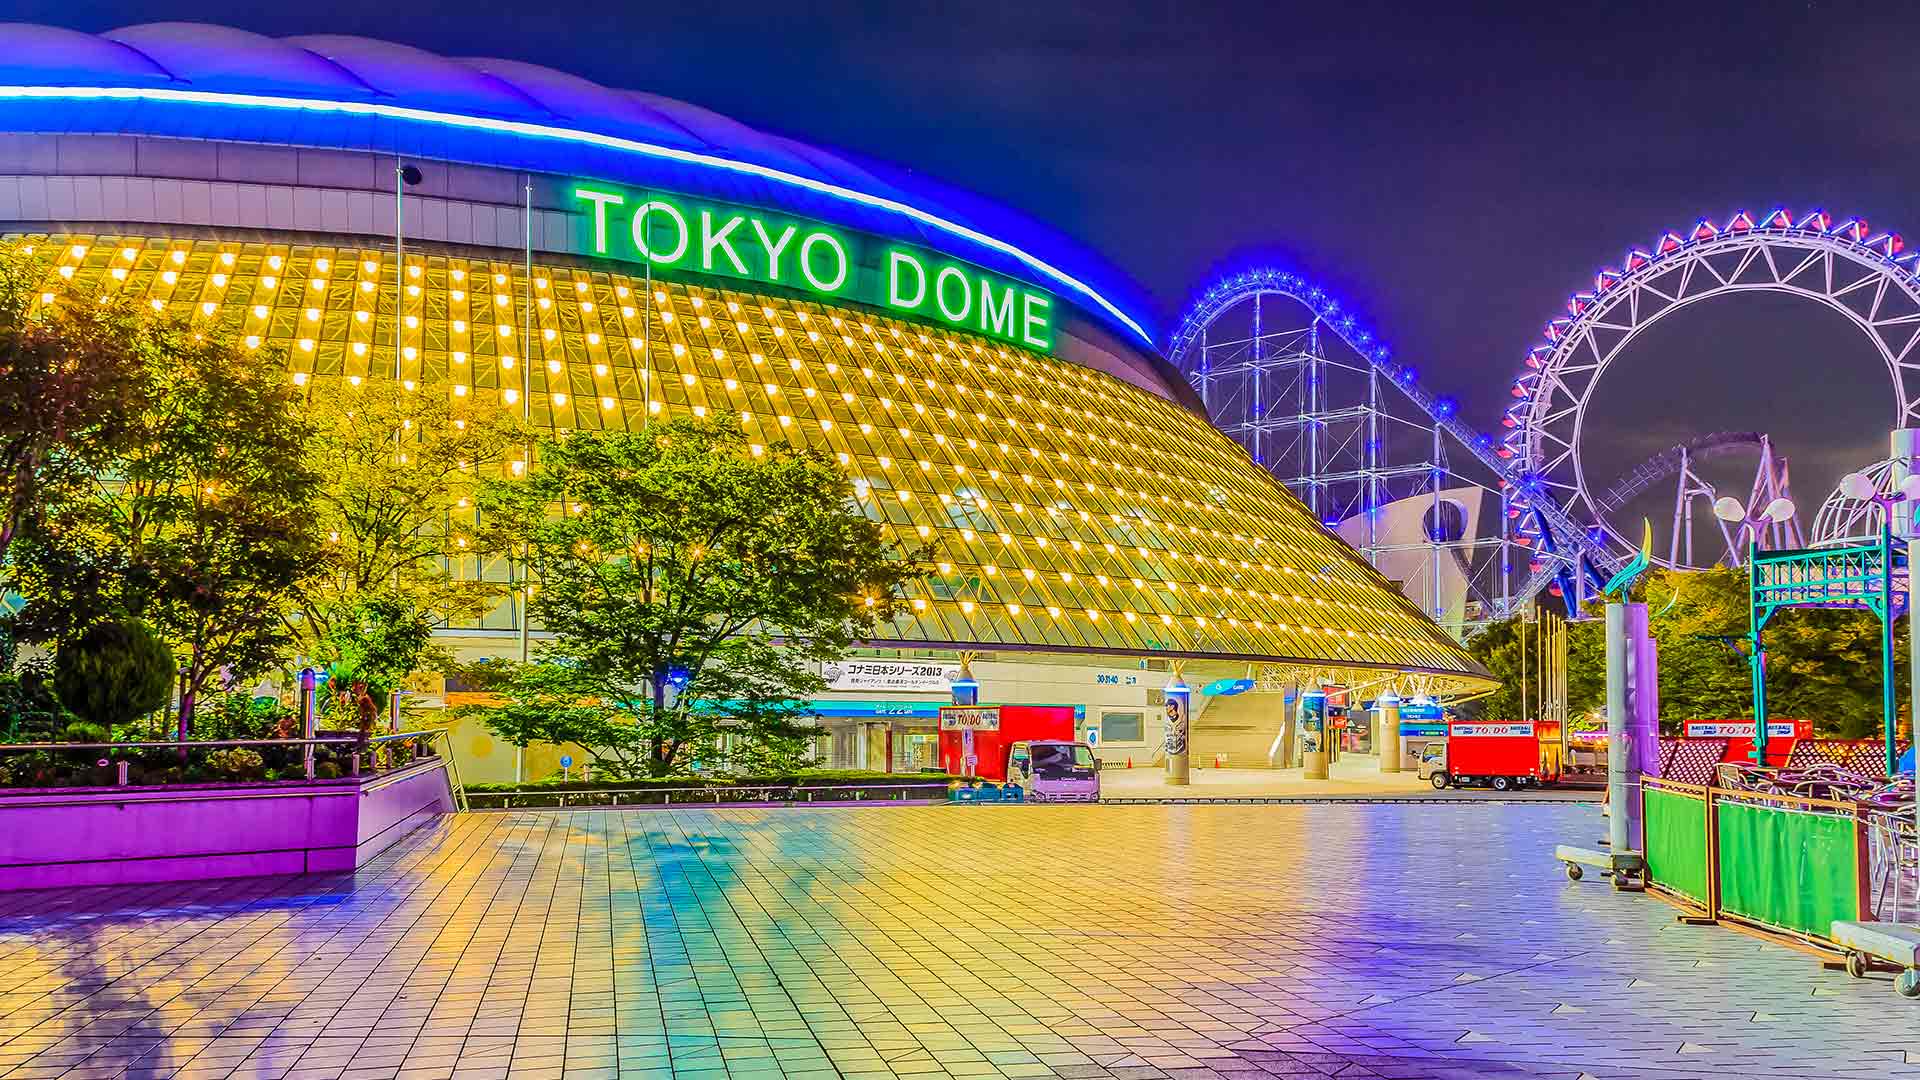 PAVEMENT 2/15 LIVE Tokyo dome city 非売品 67.0%OFF htckl.water.gov.my